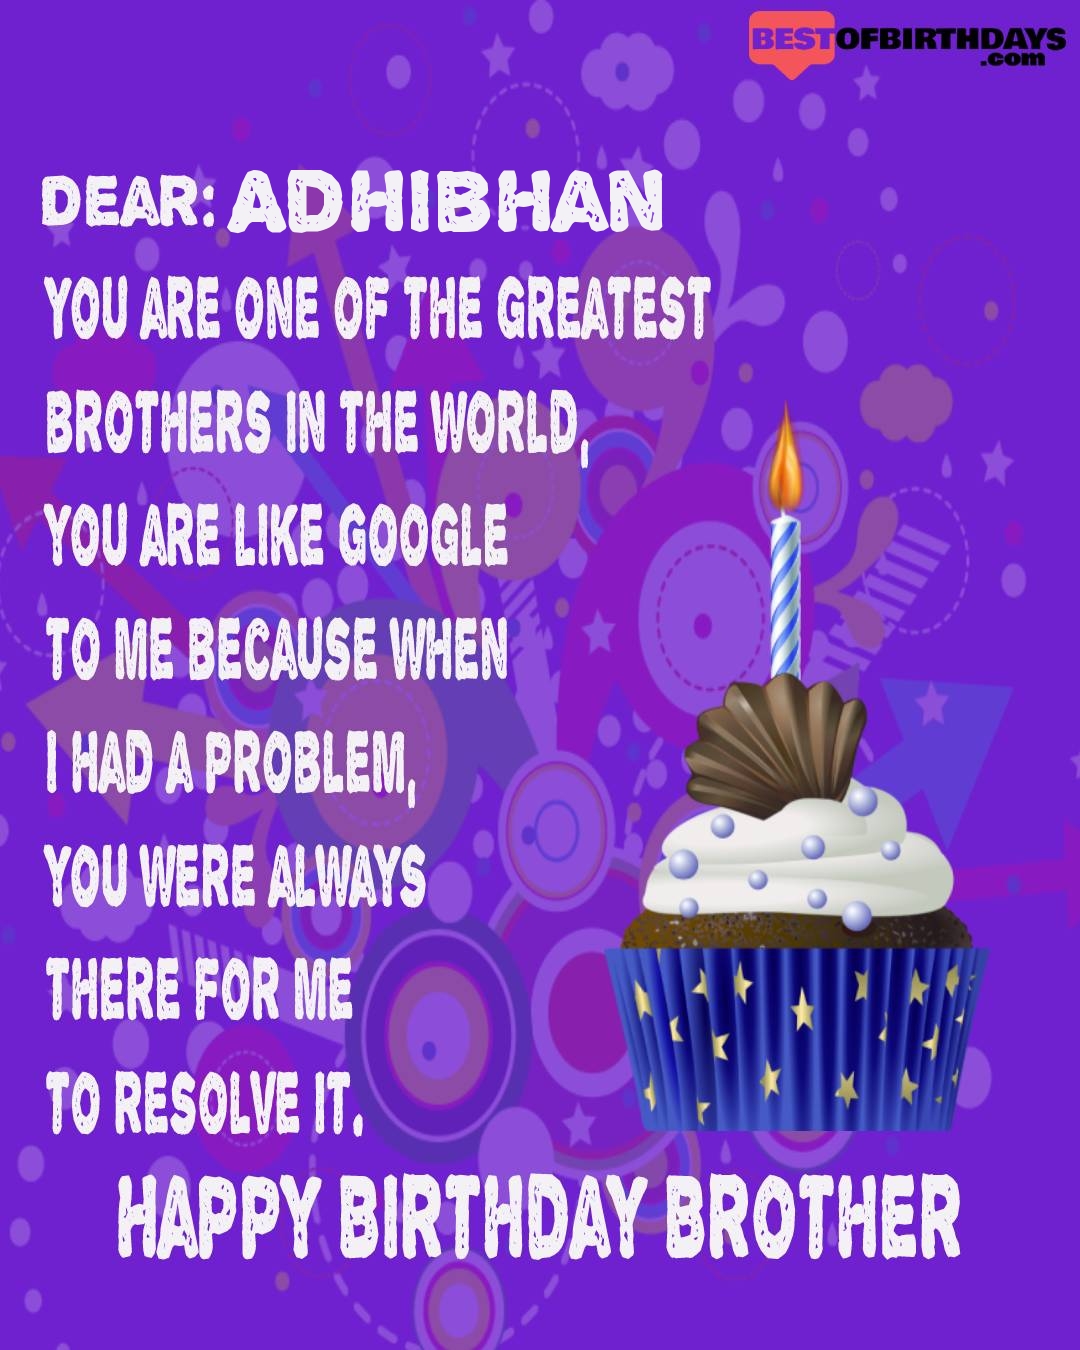 Happy birthday adhibhan bhai brother bro